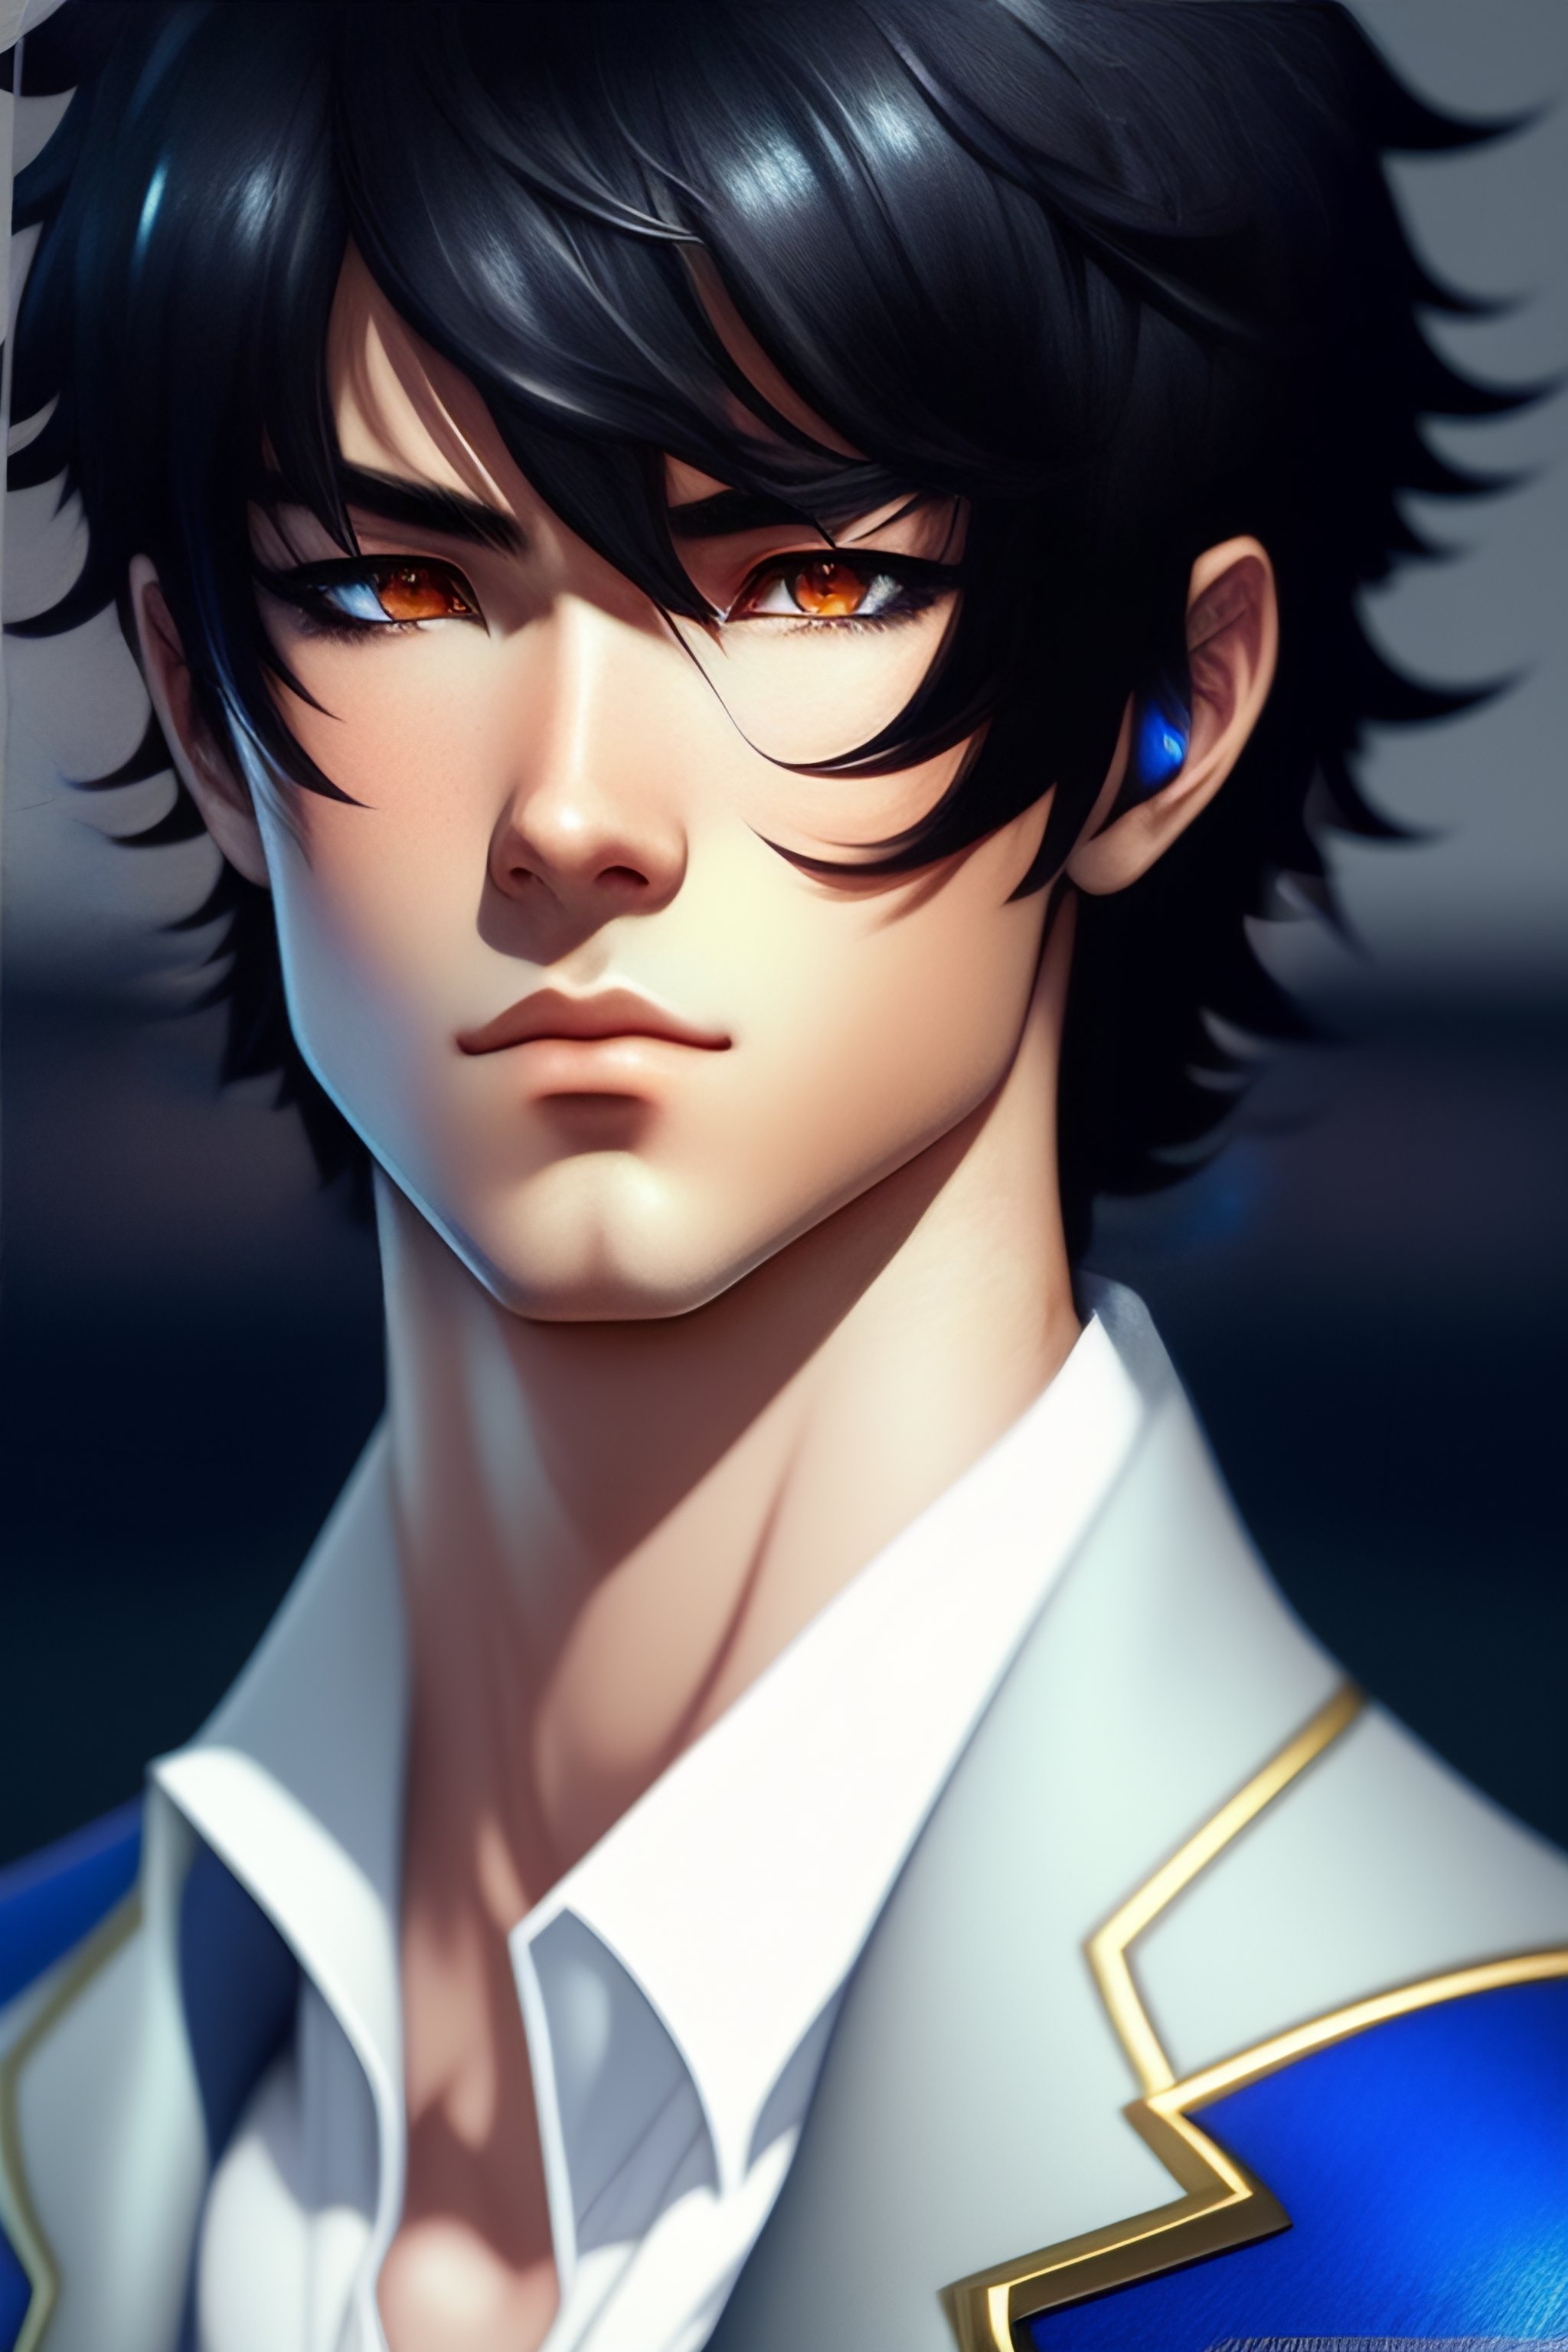 Lexica - Anime boy, black hair, blue eyes, photorealistic